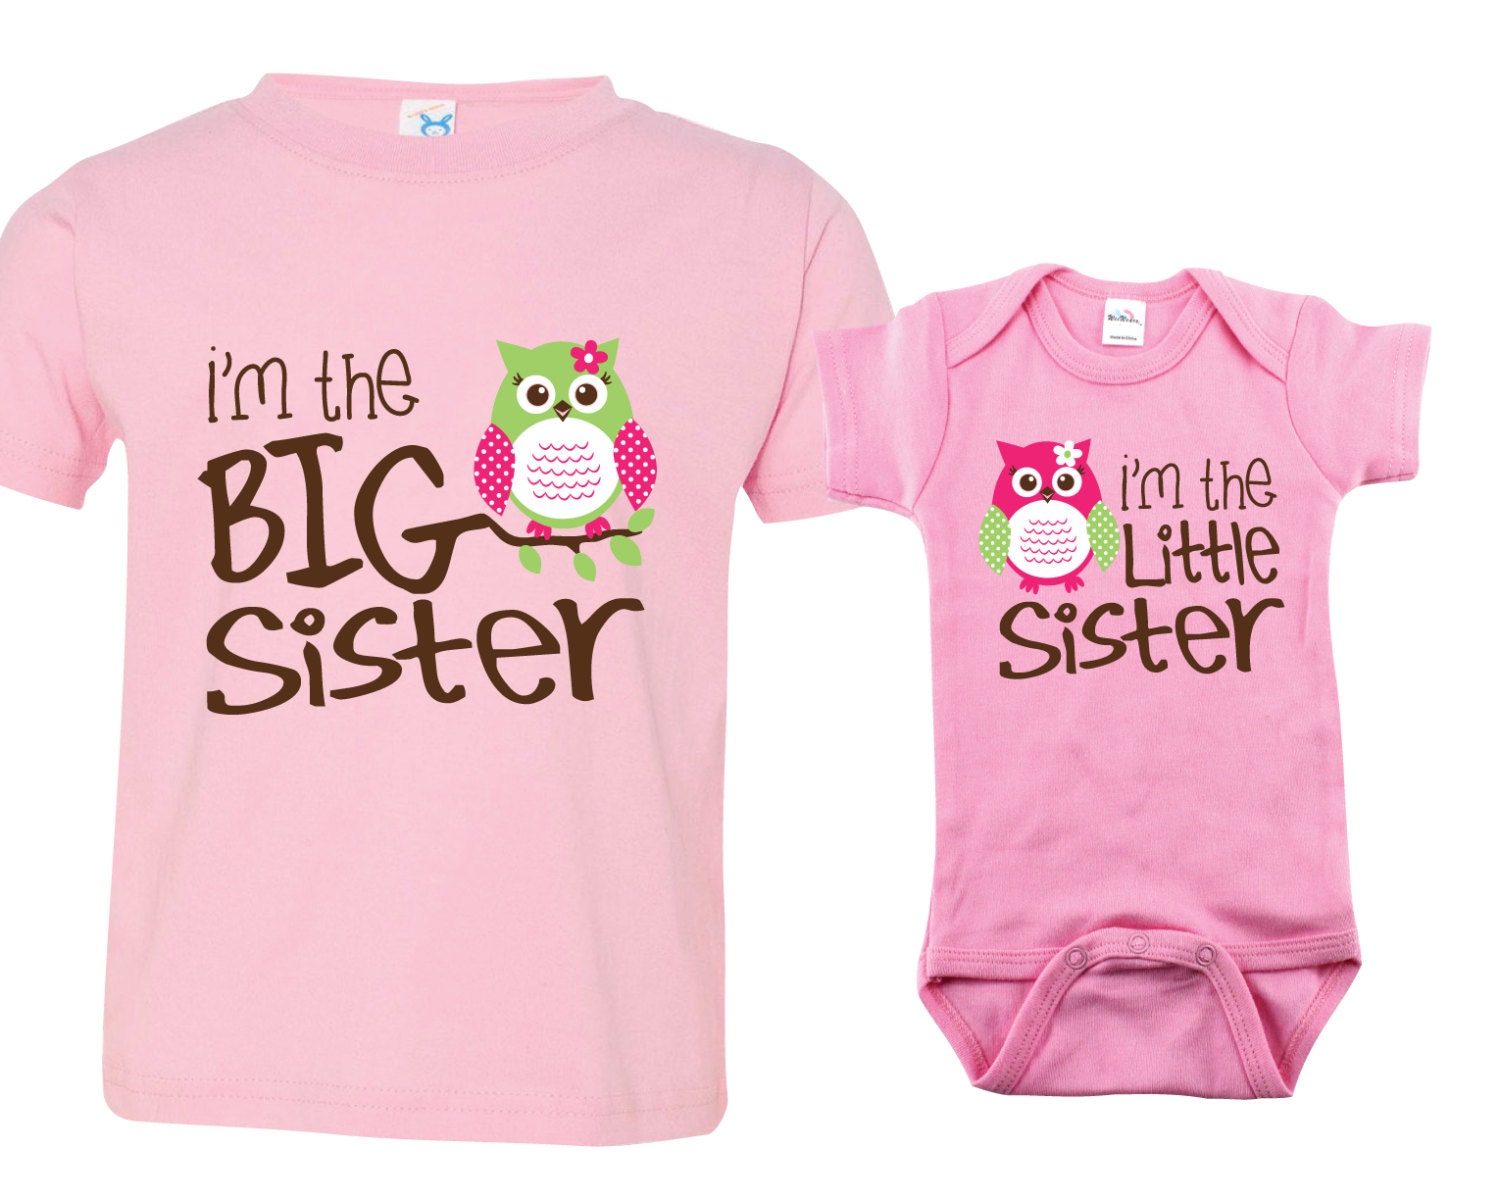 My sister toy. Платье для девочки my little sister. Систер. Биг Систерс. Sisters одежда.